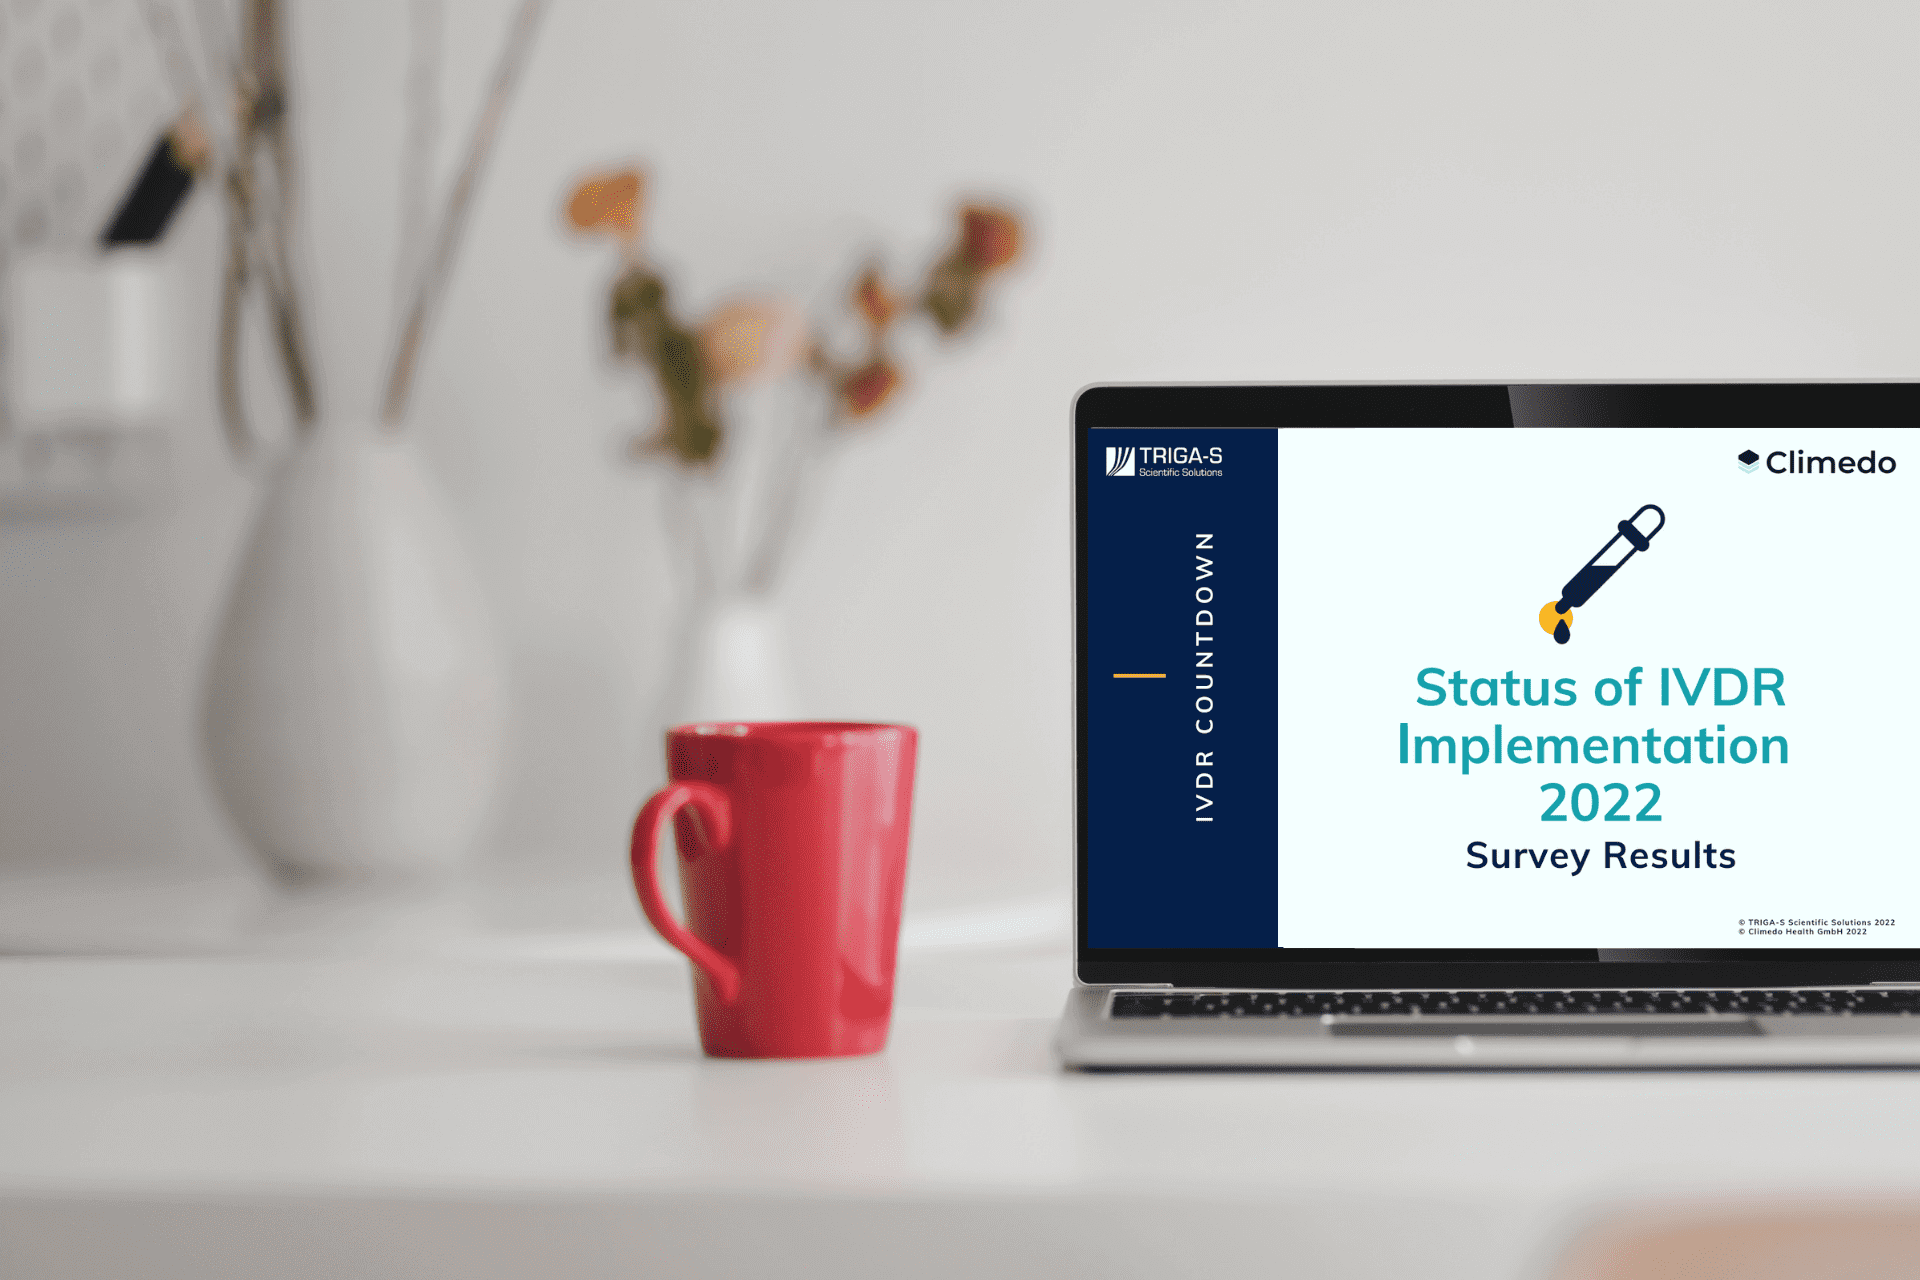 Status of IVDR Implementation 2022